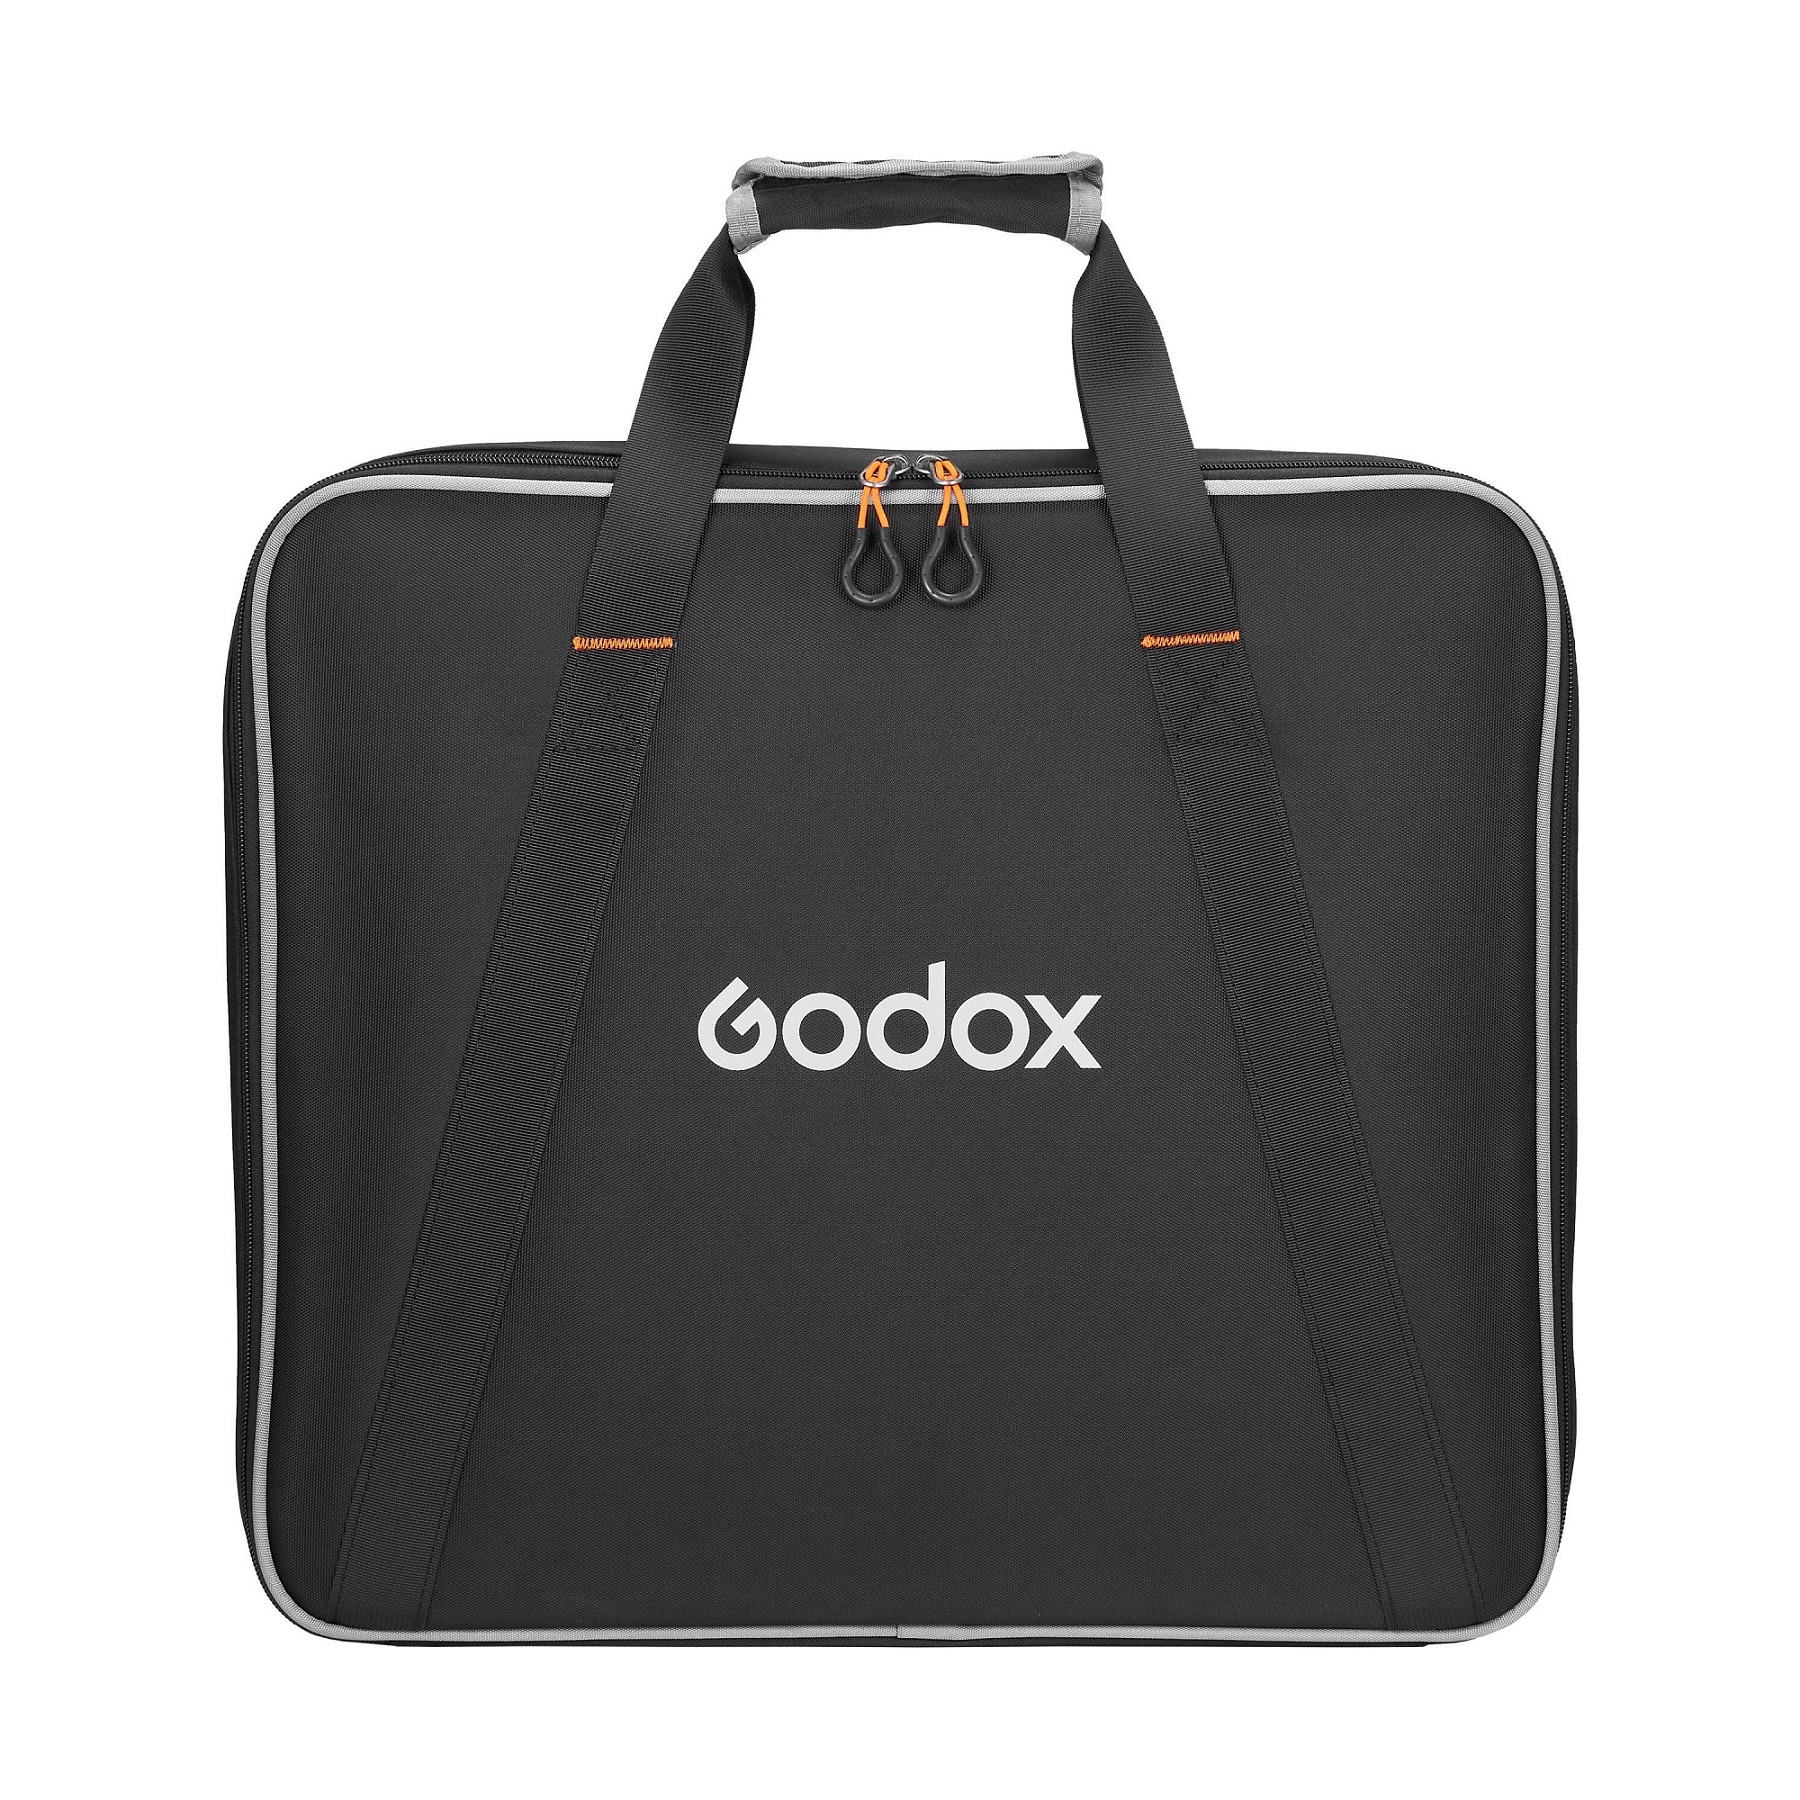    Godox LDX100R   Ultra-mart